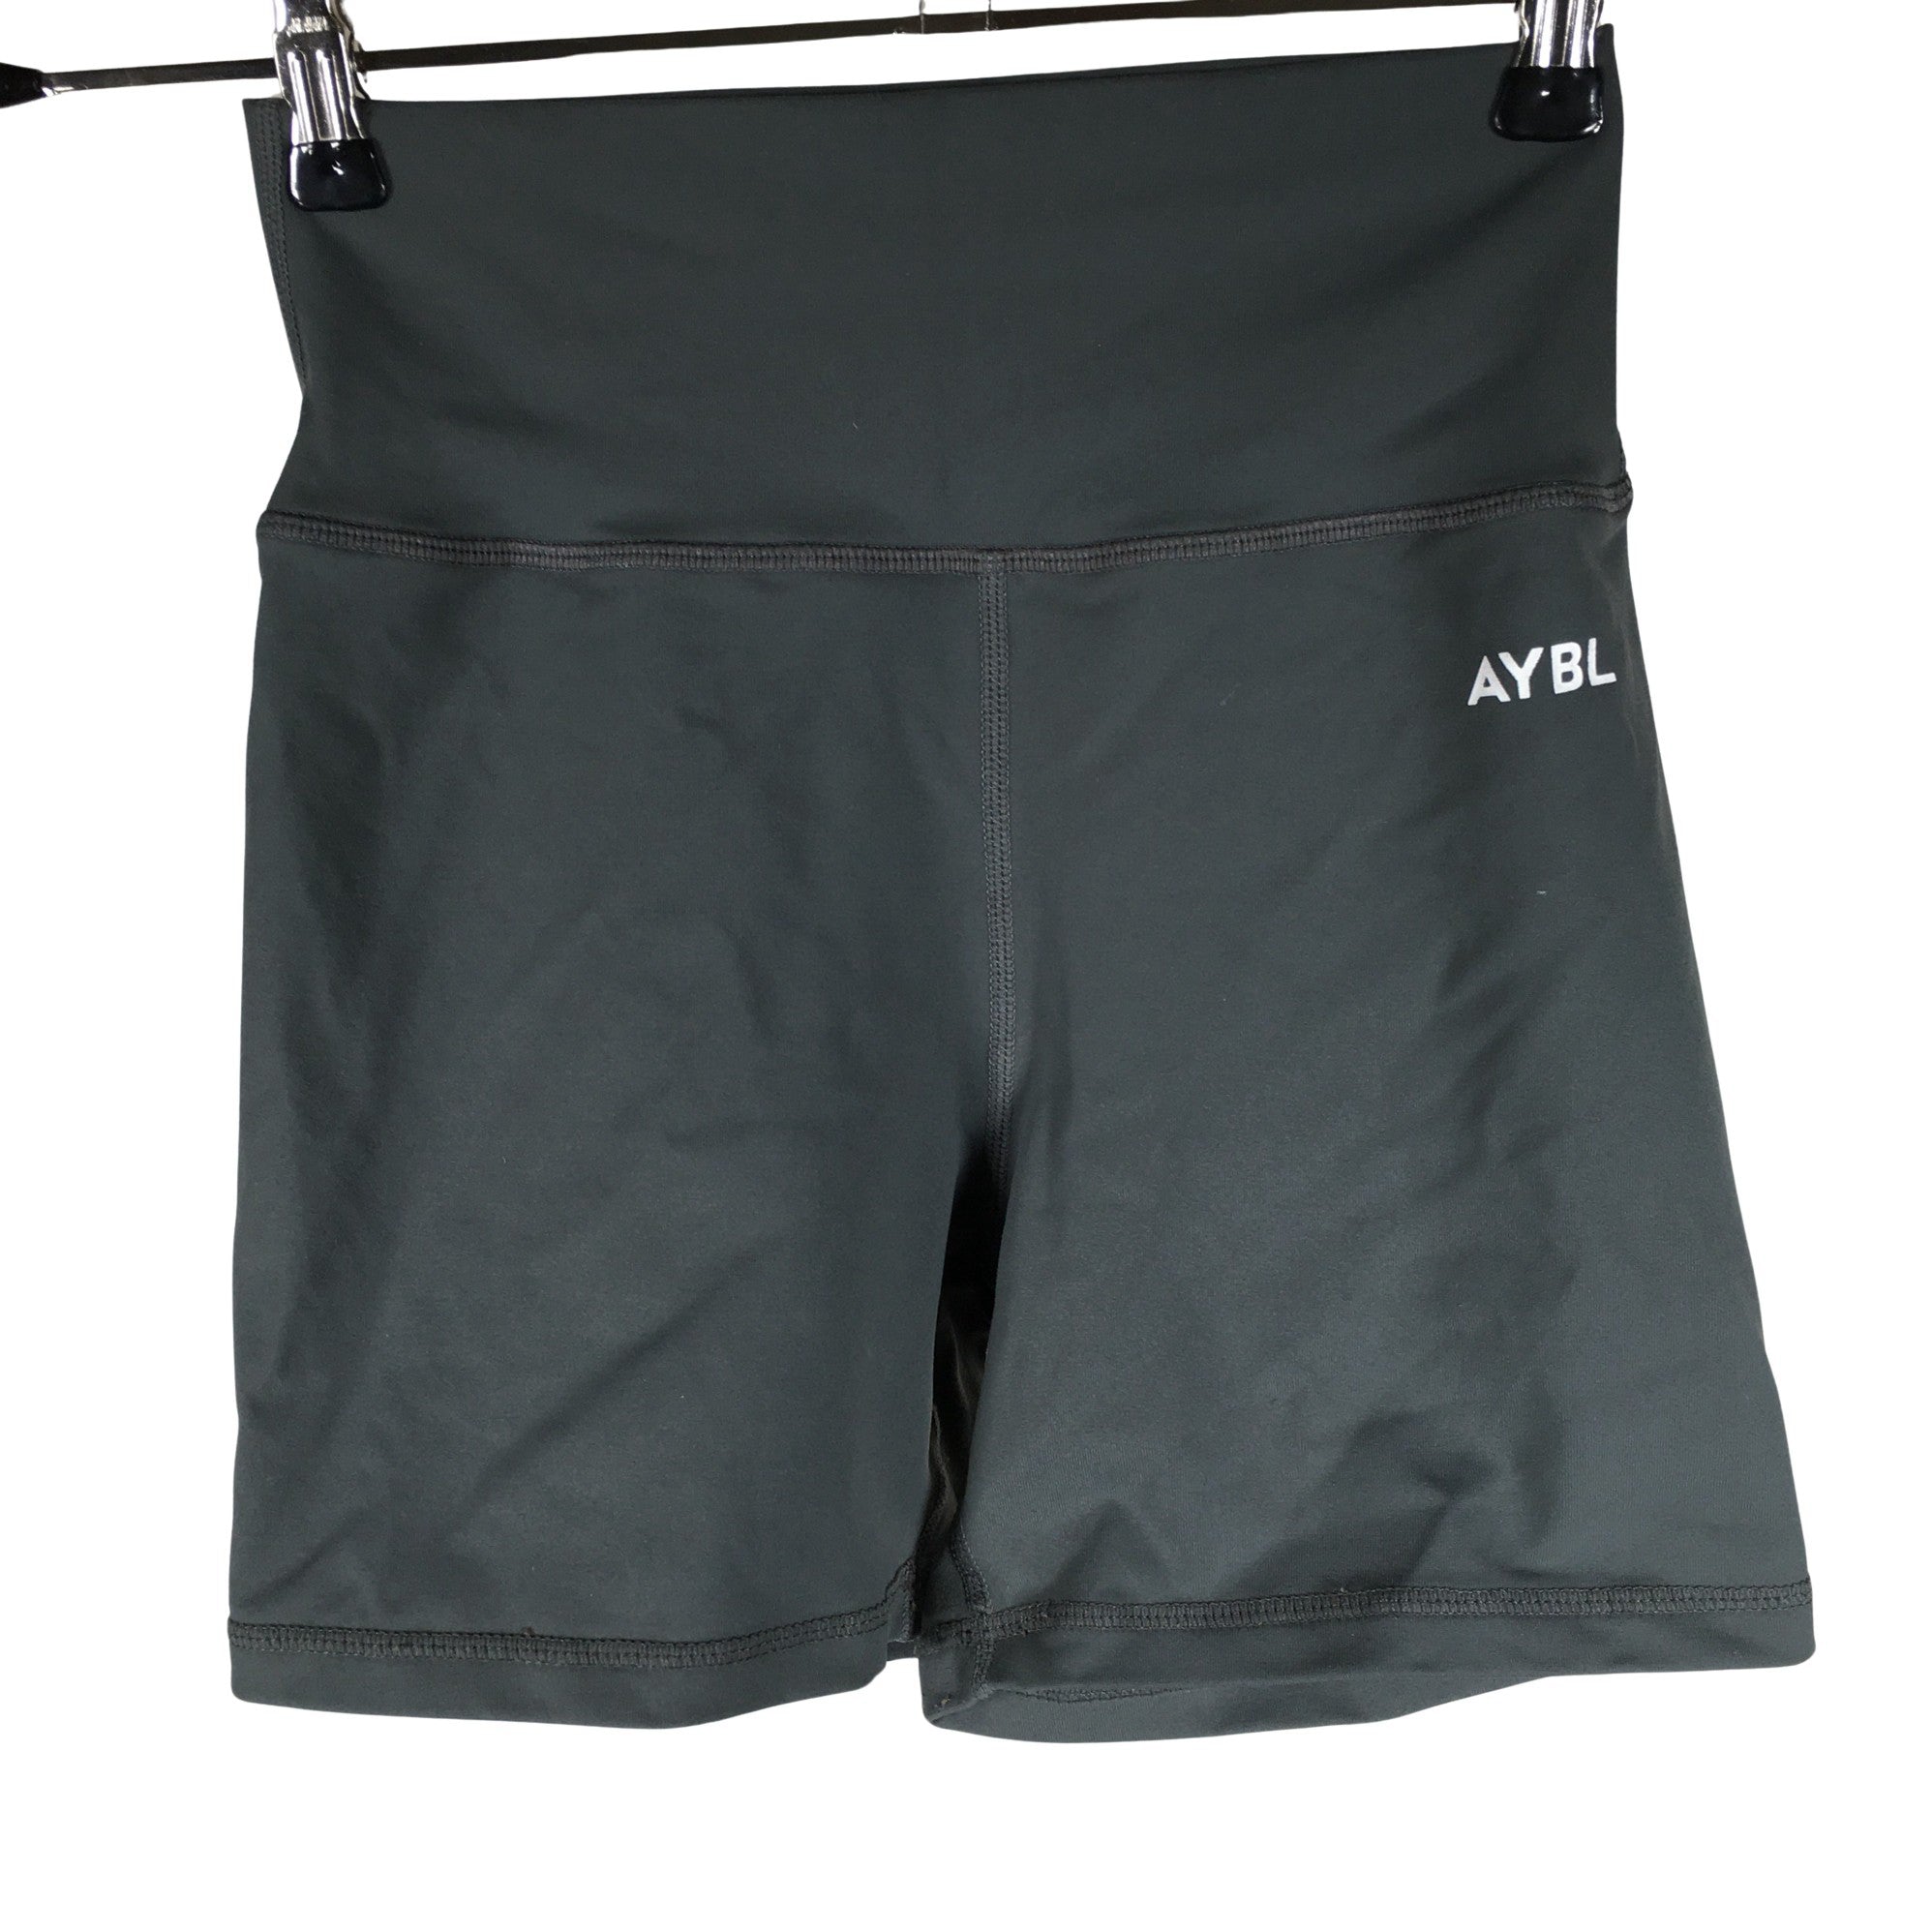 Women's AYBL Sports shorts, size 36 (Grey)